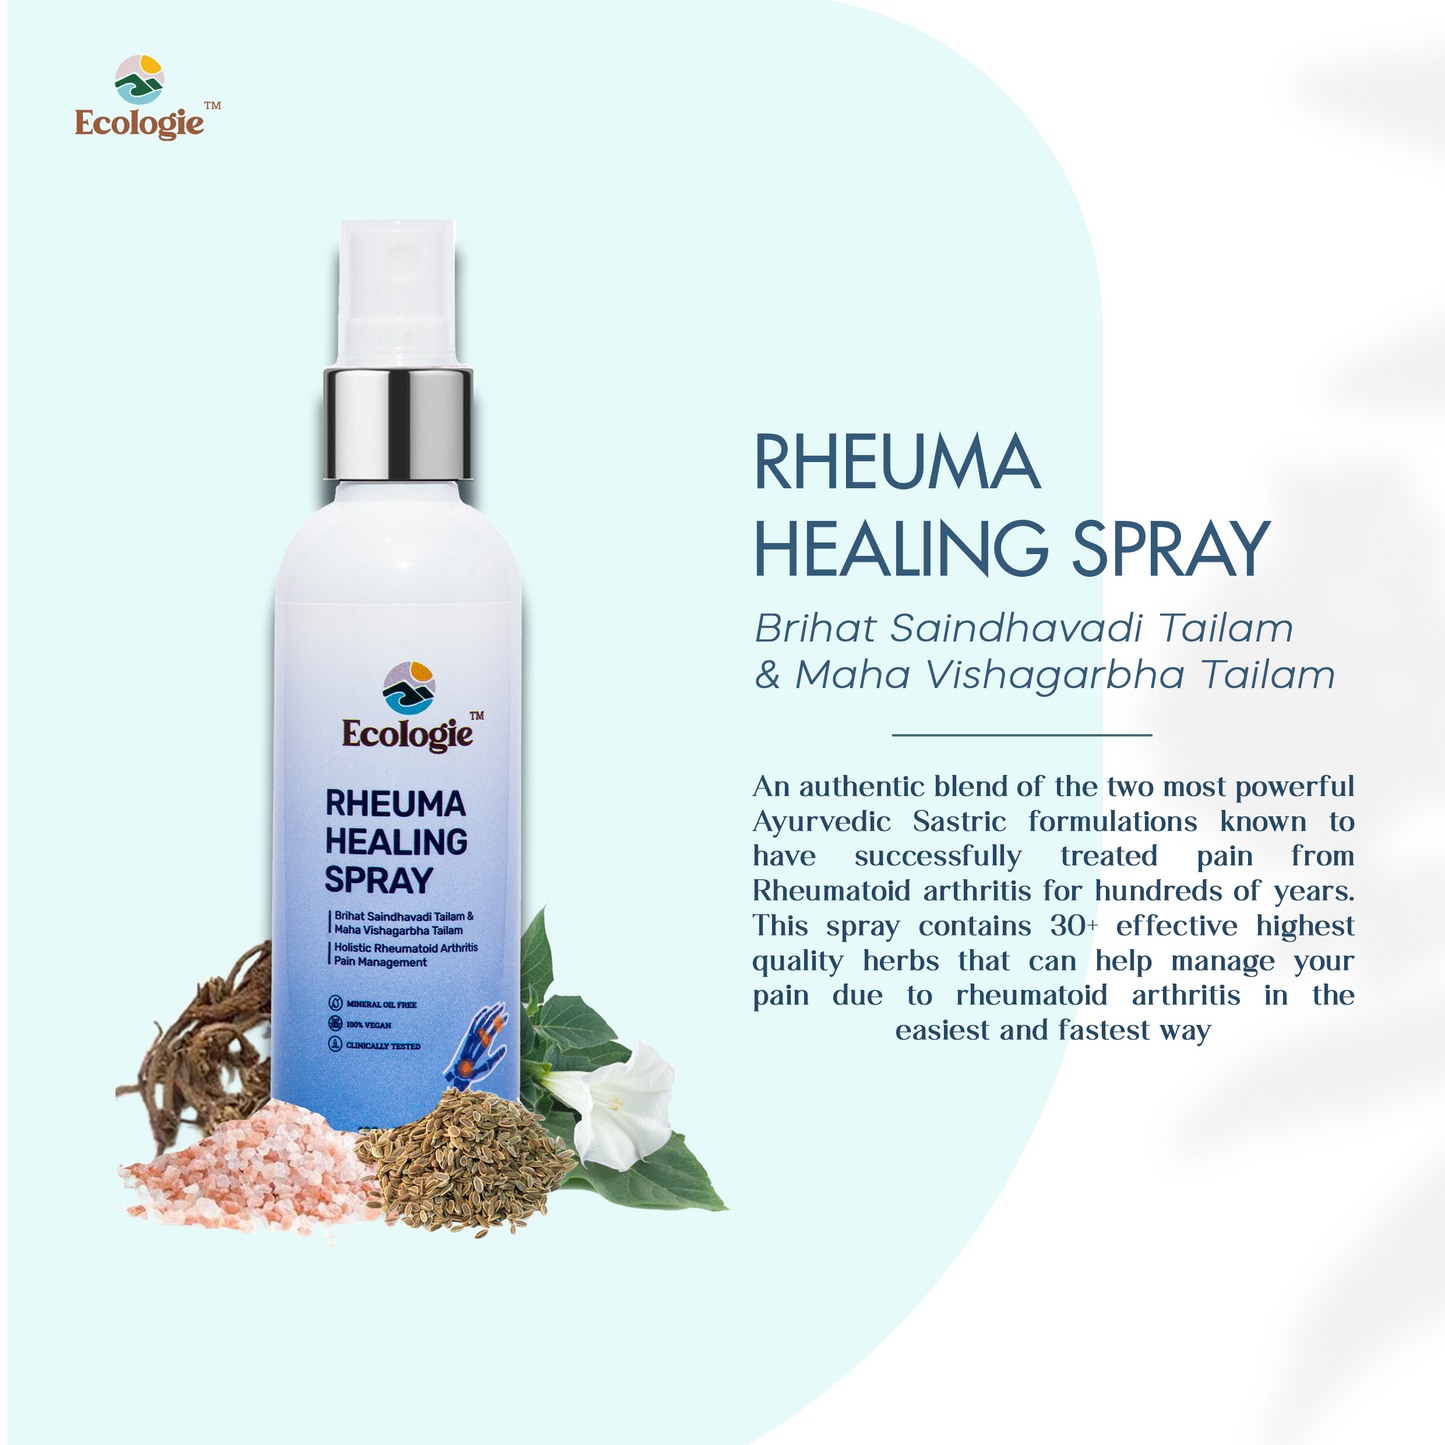 Rheuma Healing Spray